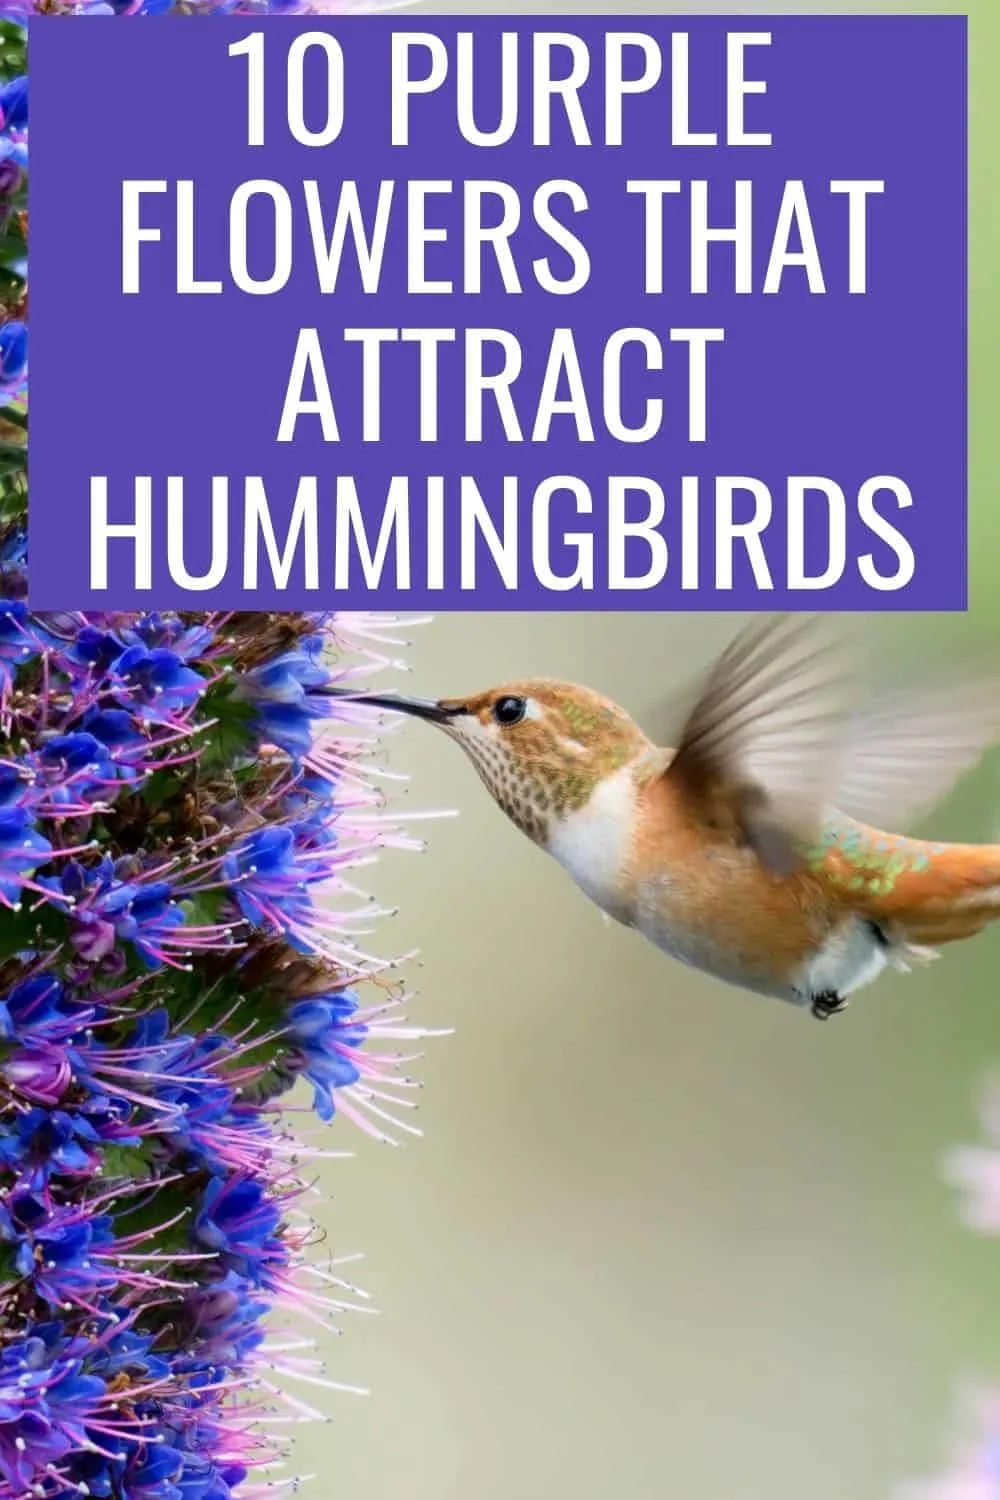 10 purple flowers that attract hummingbirds